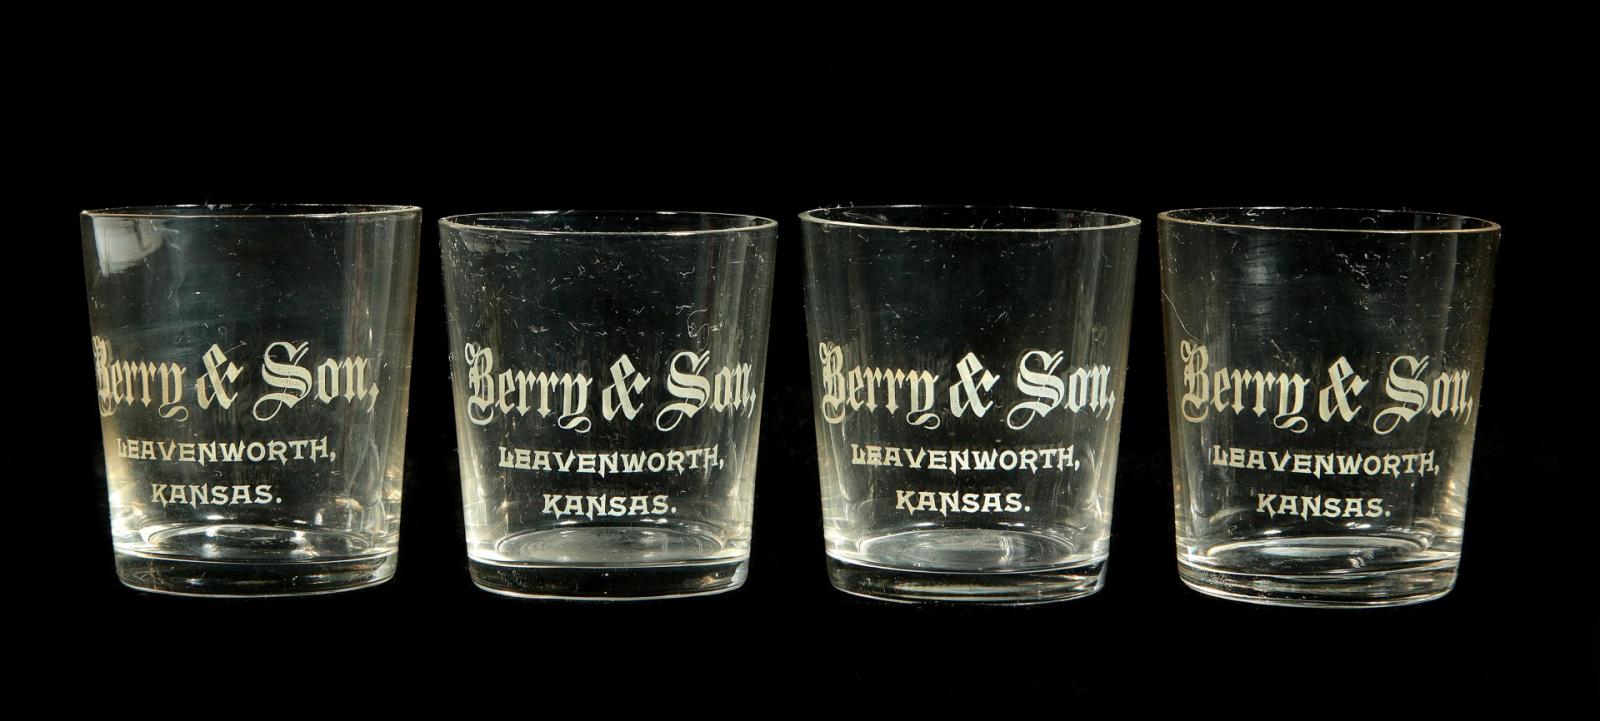 FOUR BERRY & SON LEAVENWORTH, KANSAS SHOT GLASSES